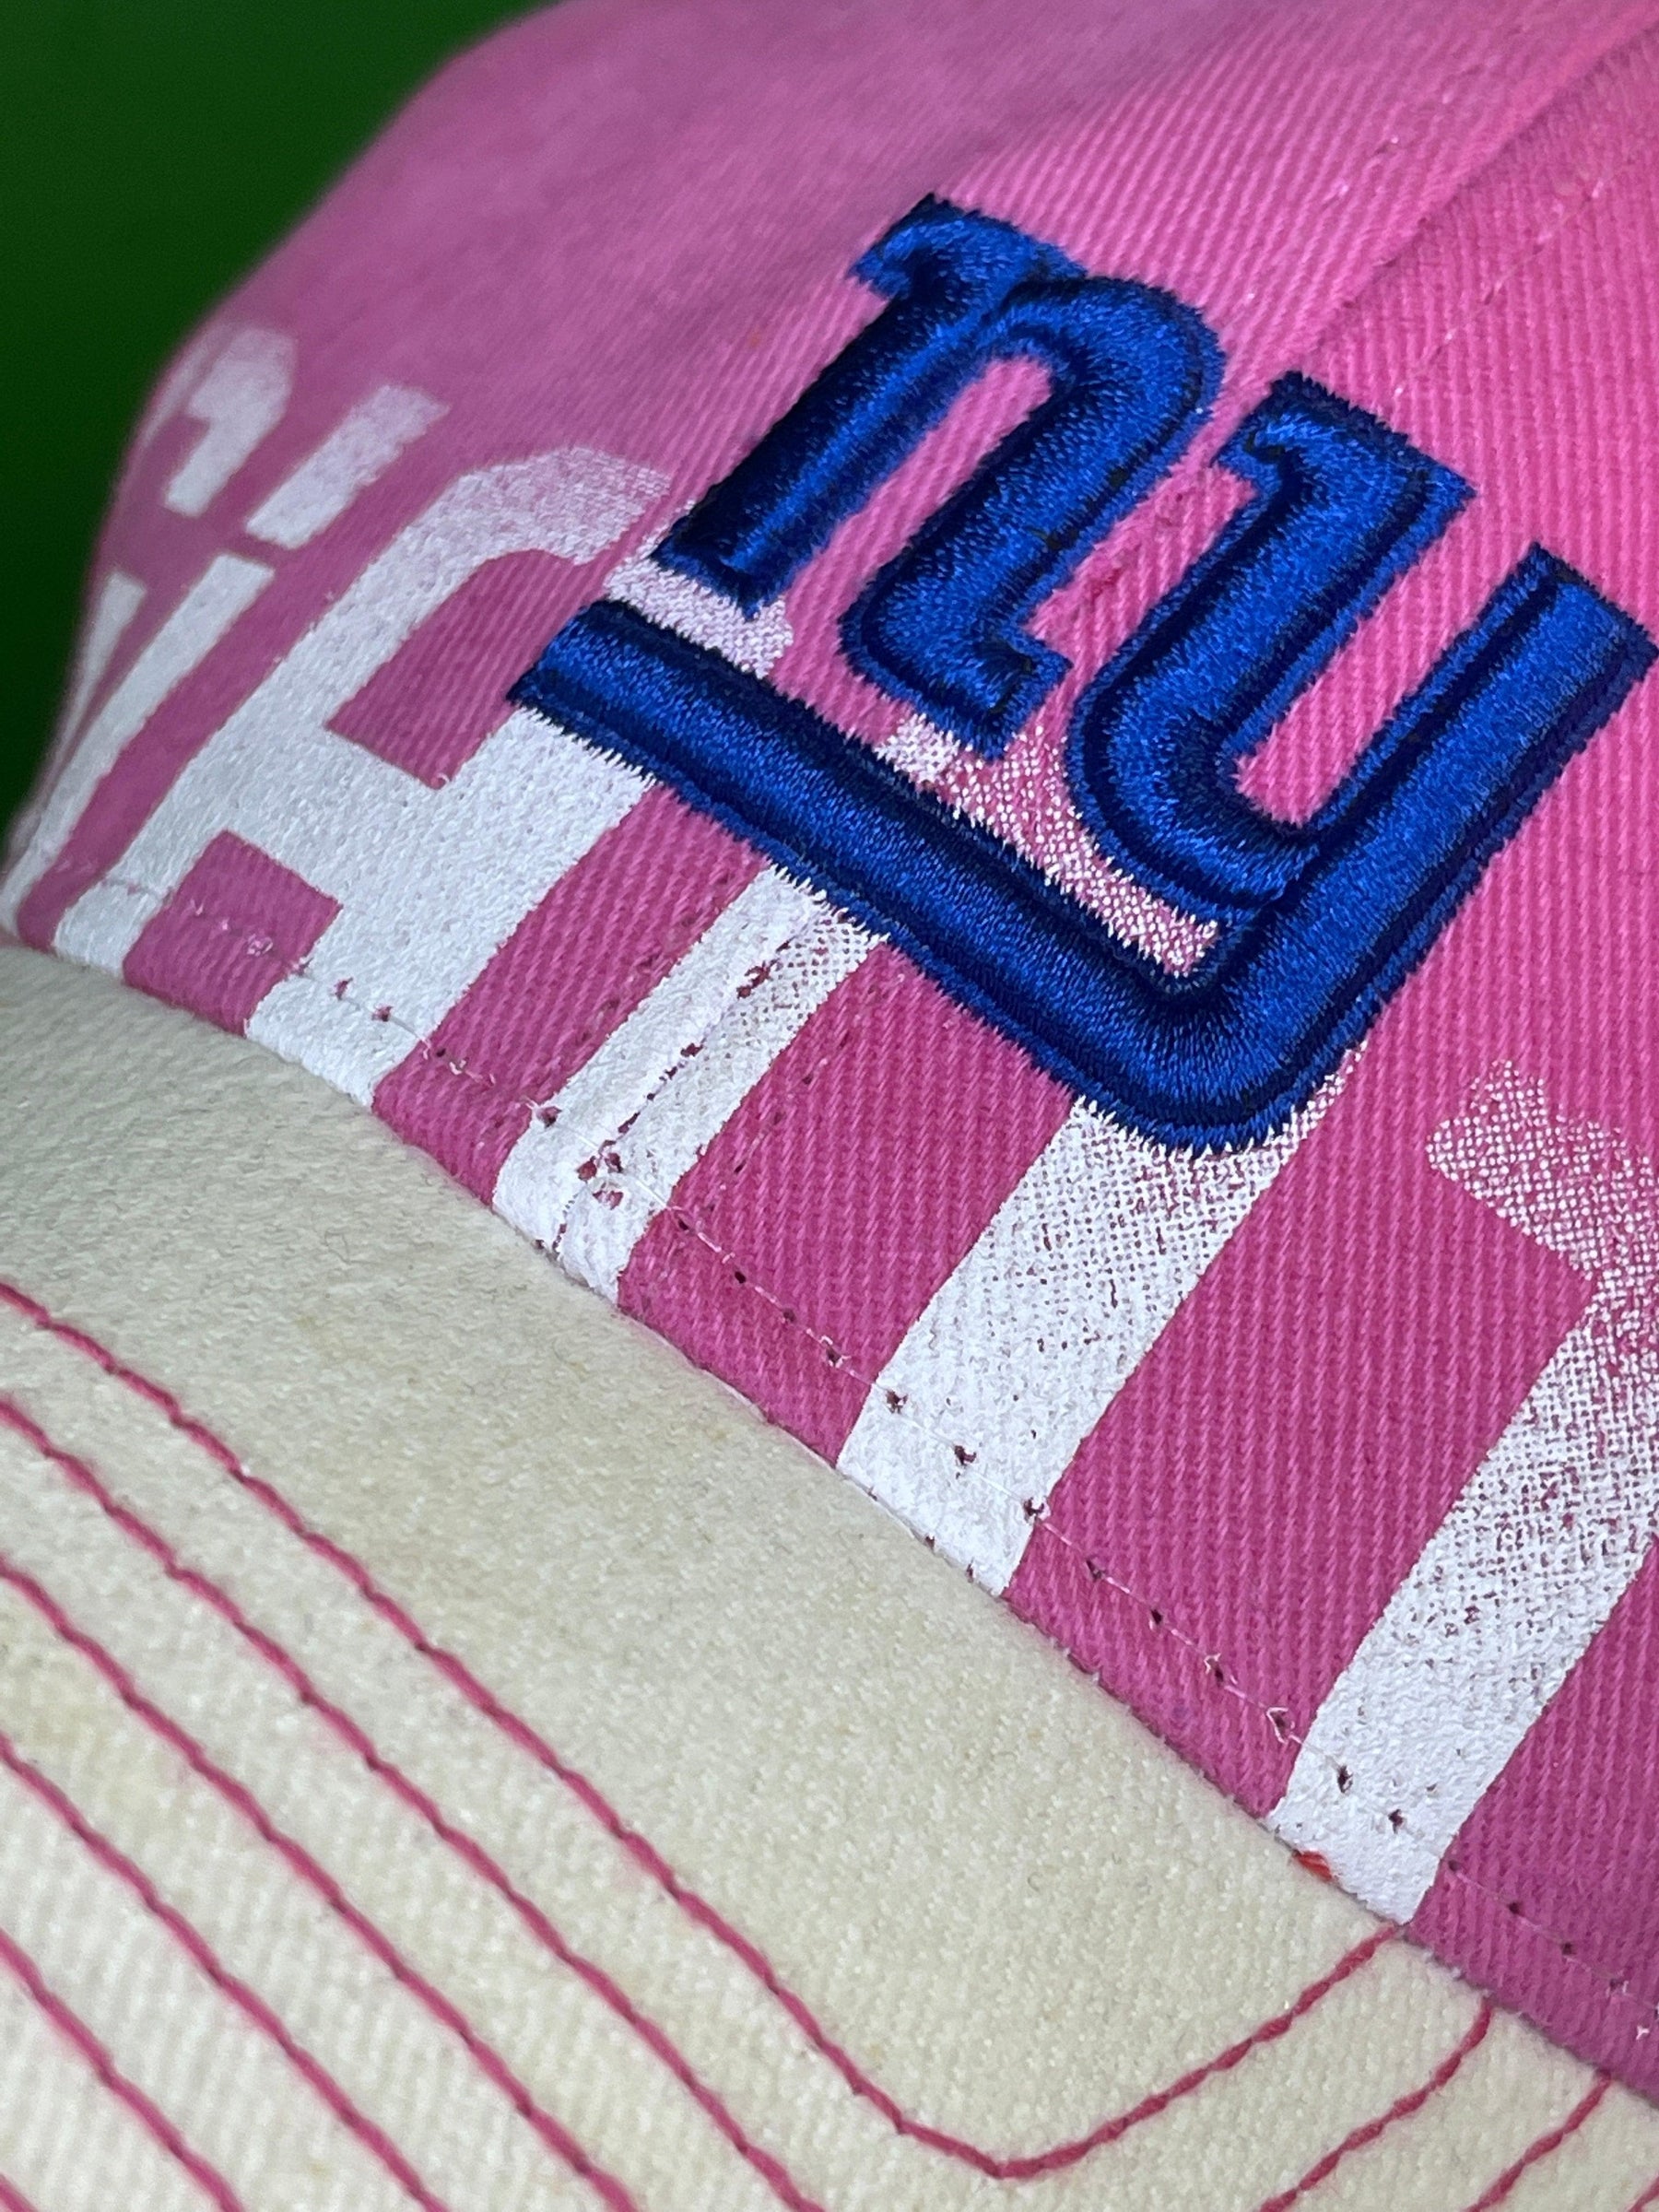 NFL New York Giants Reebok Pink Crucial Catch Cap/Hat Women's OSFM